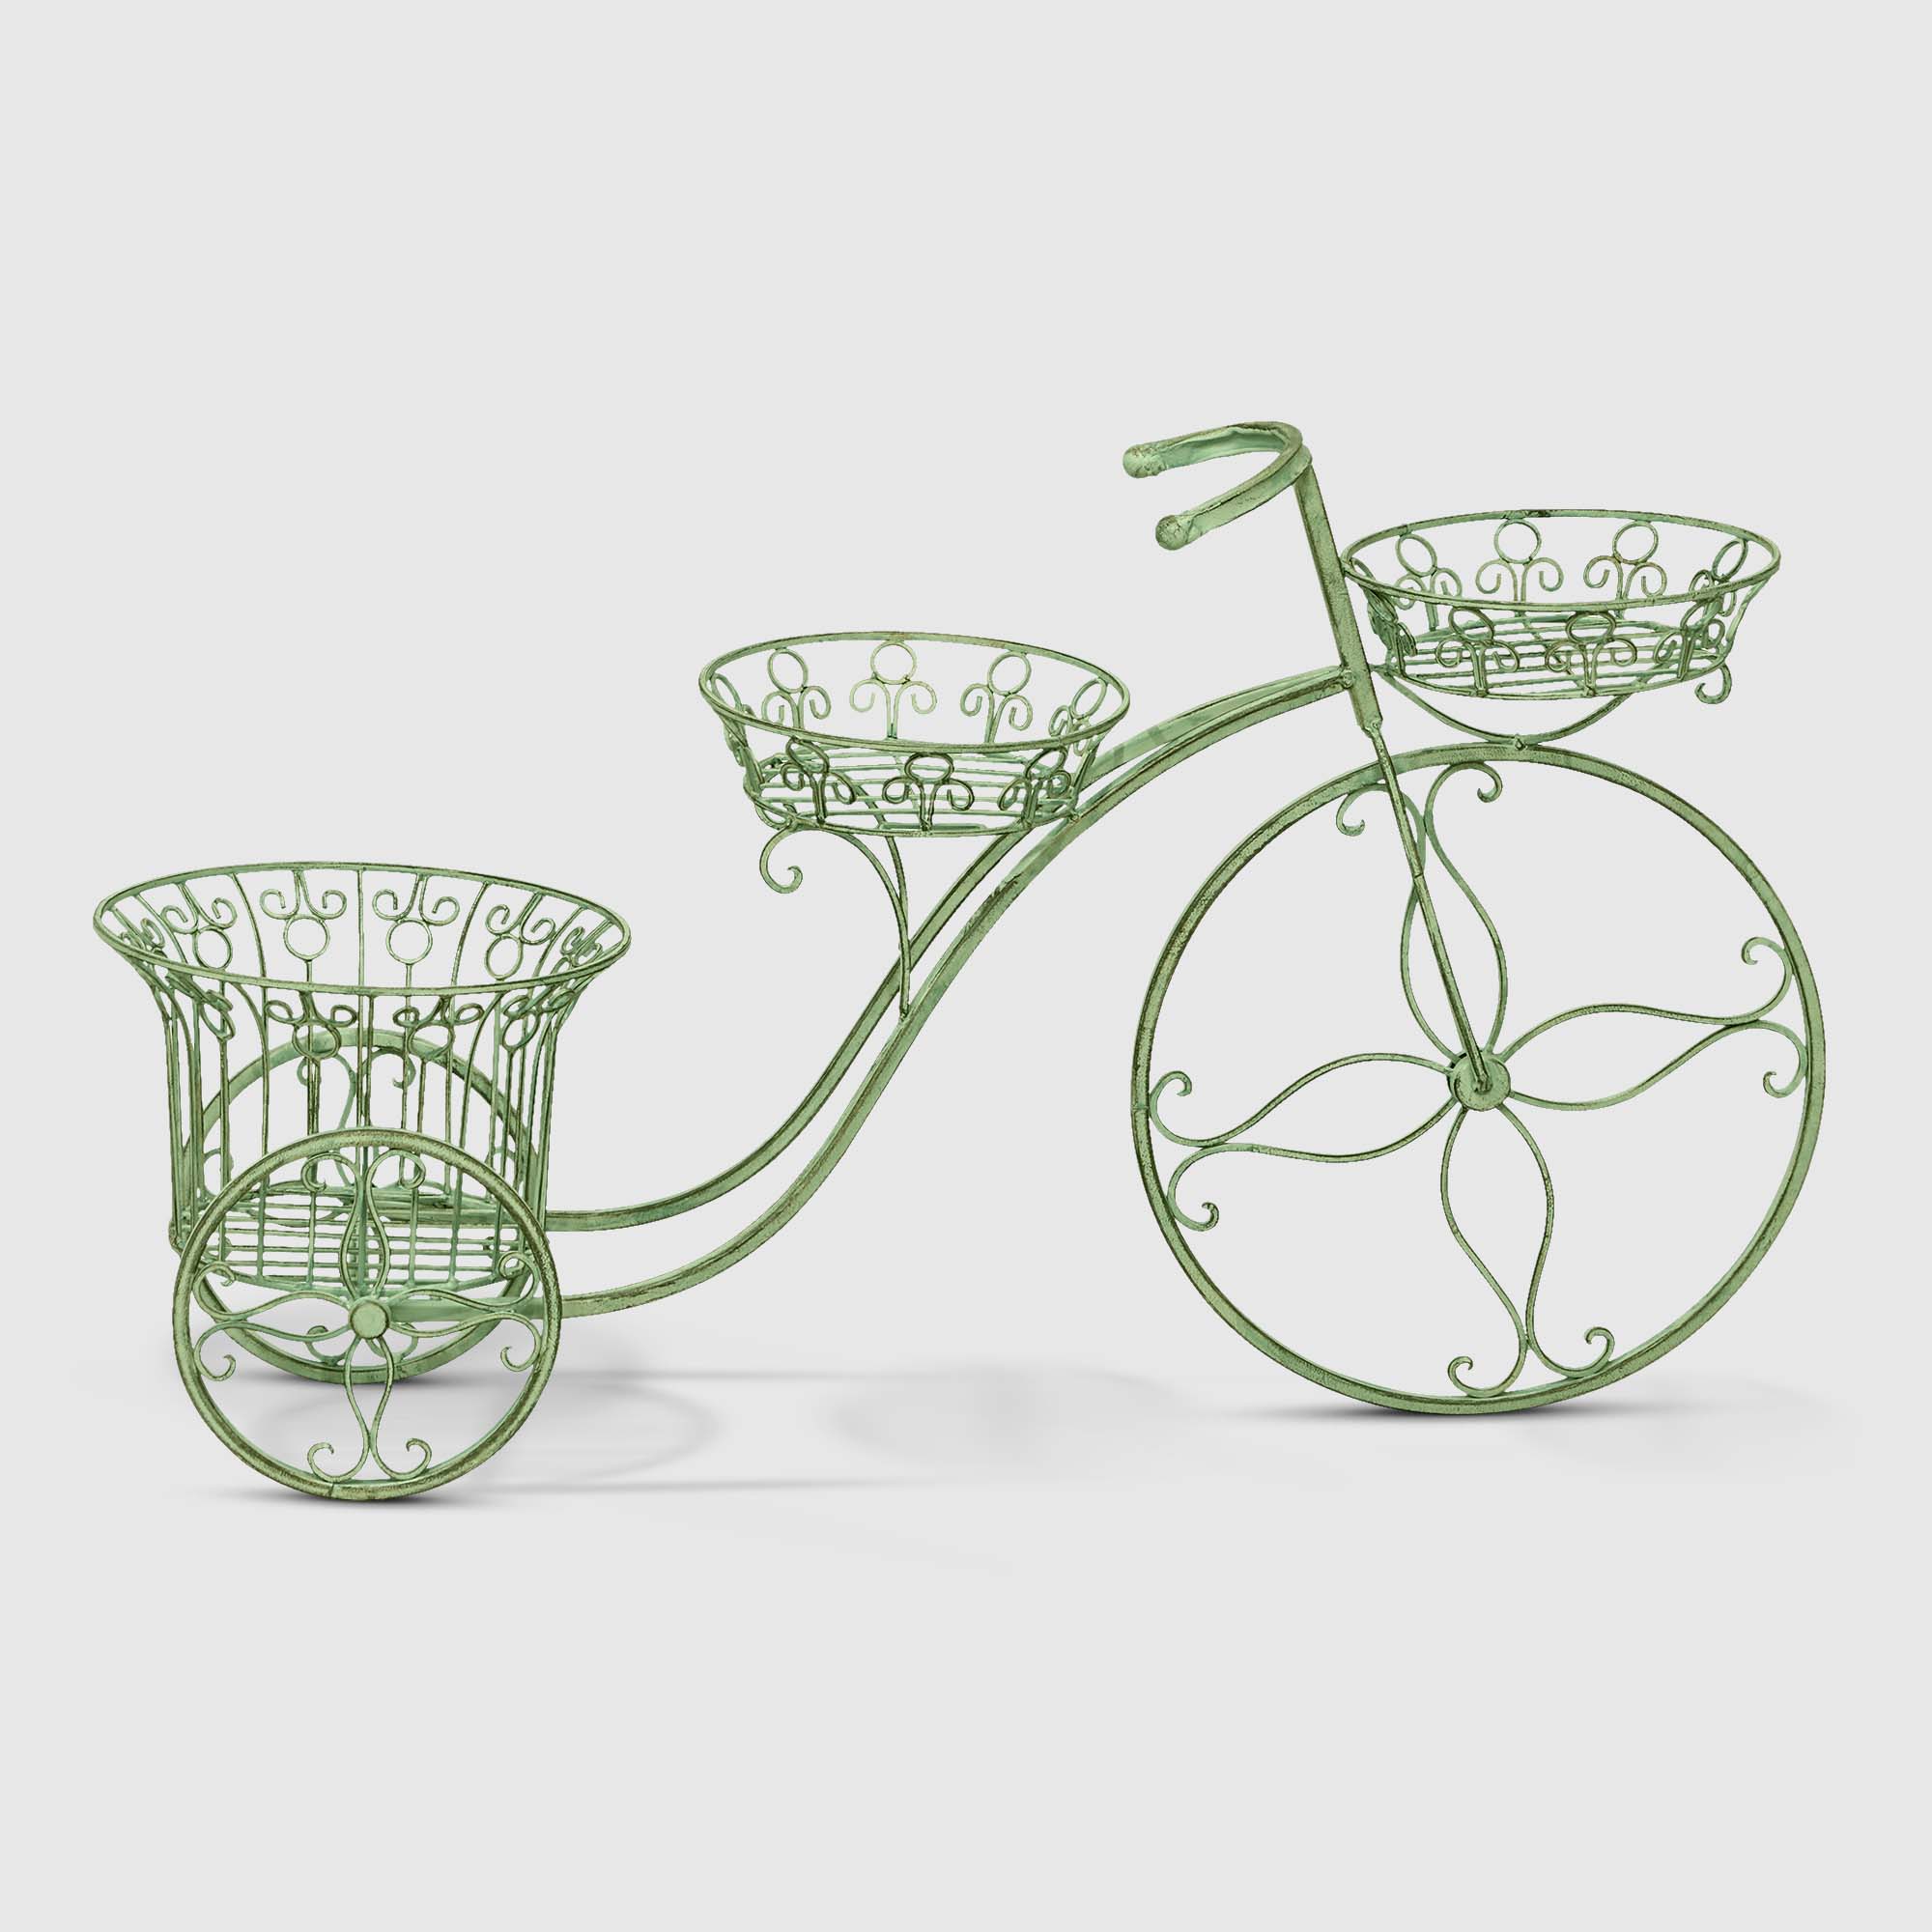 фото Подставка для цветов anxi jiacheng велосипед оливковый 95x53x27 см